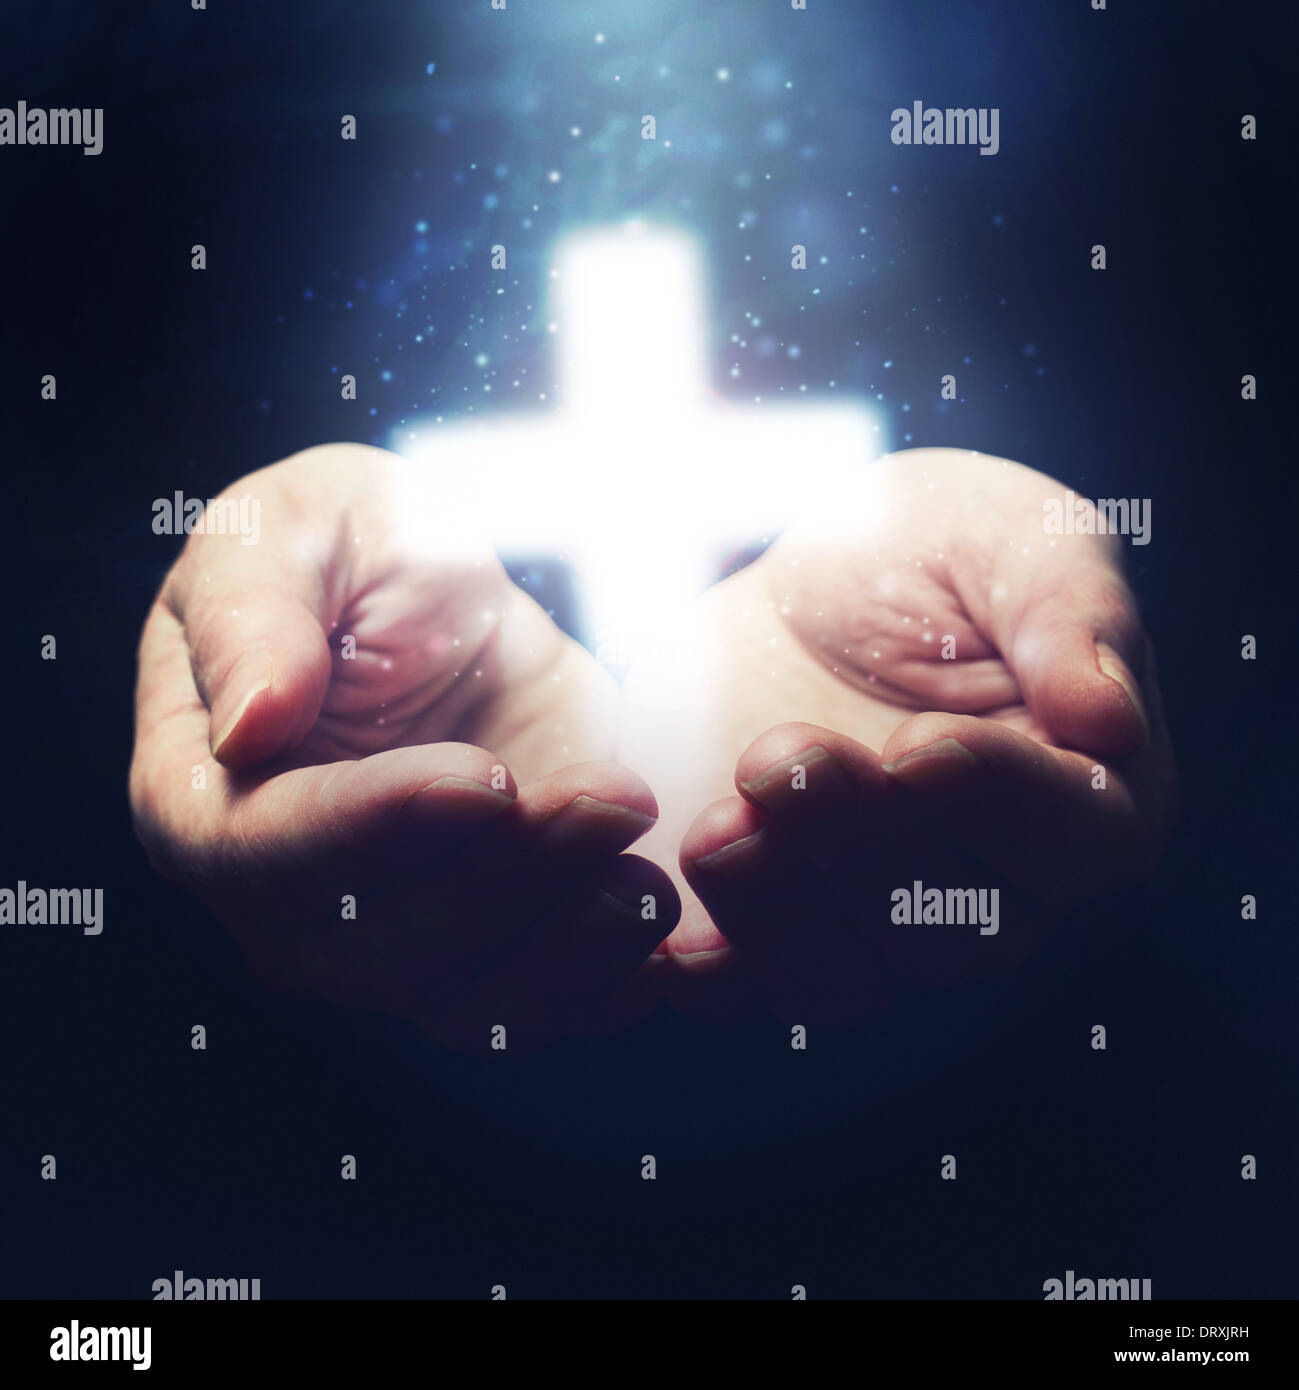 Open hands holding cross, symbol of Christian faith Stock Photo